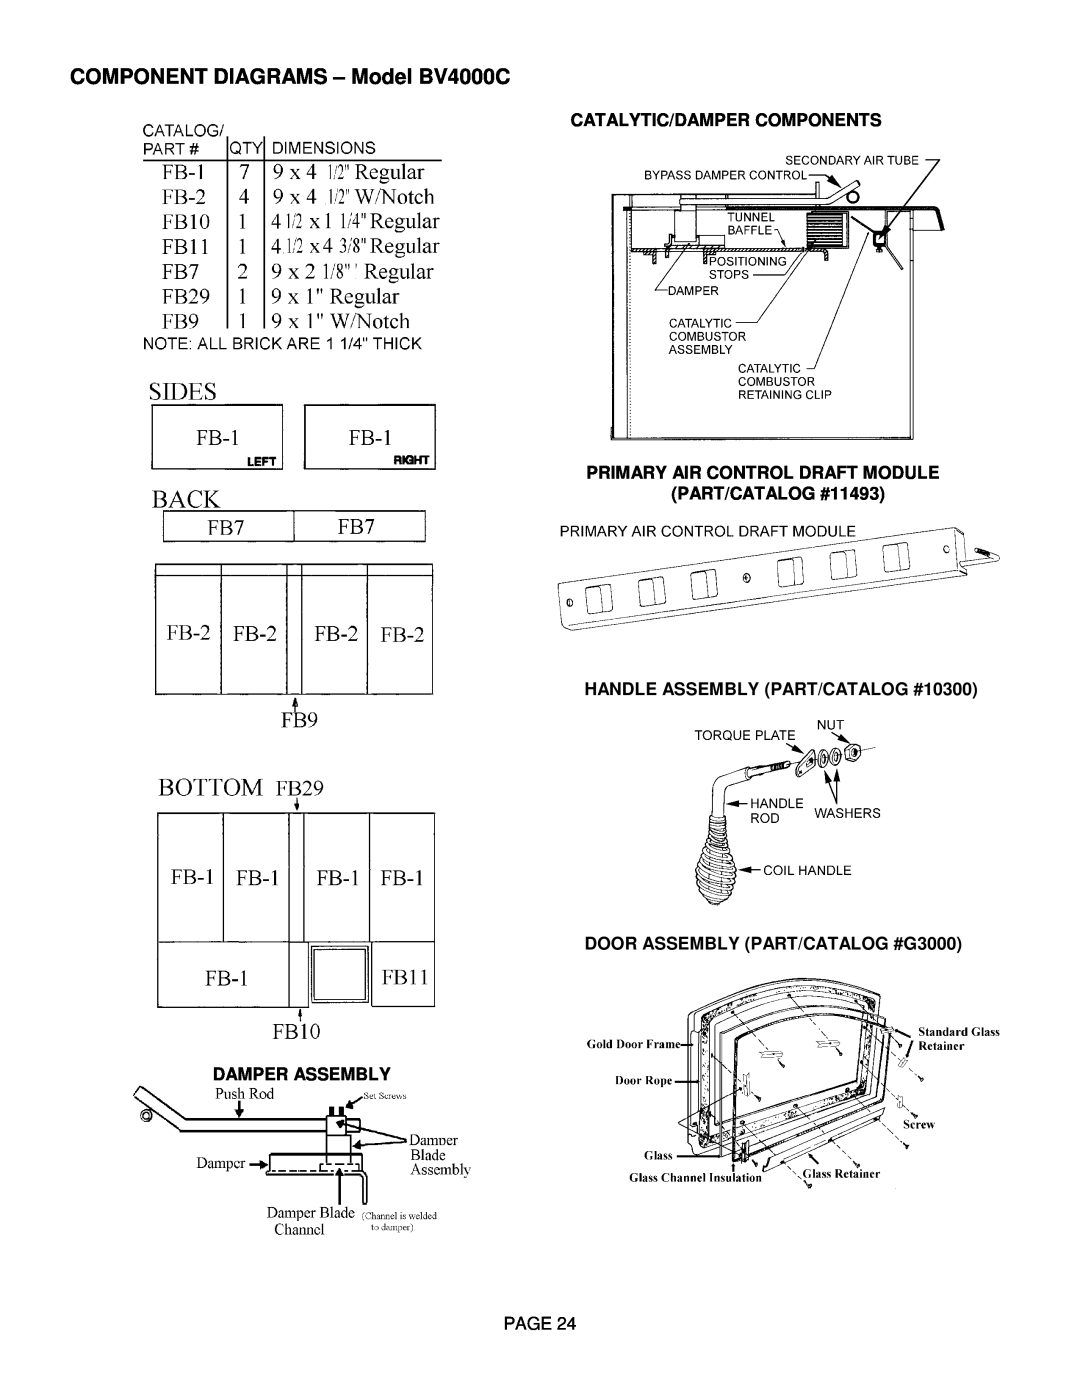 Lennox International Inc operation manual COMPONENT DIAGRAMS - Model BV4000C, Catalytic/Damper Components 